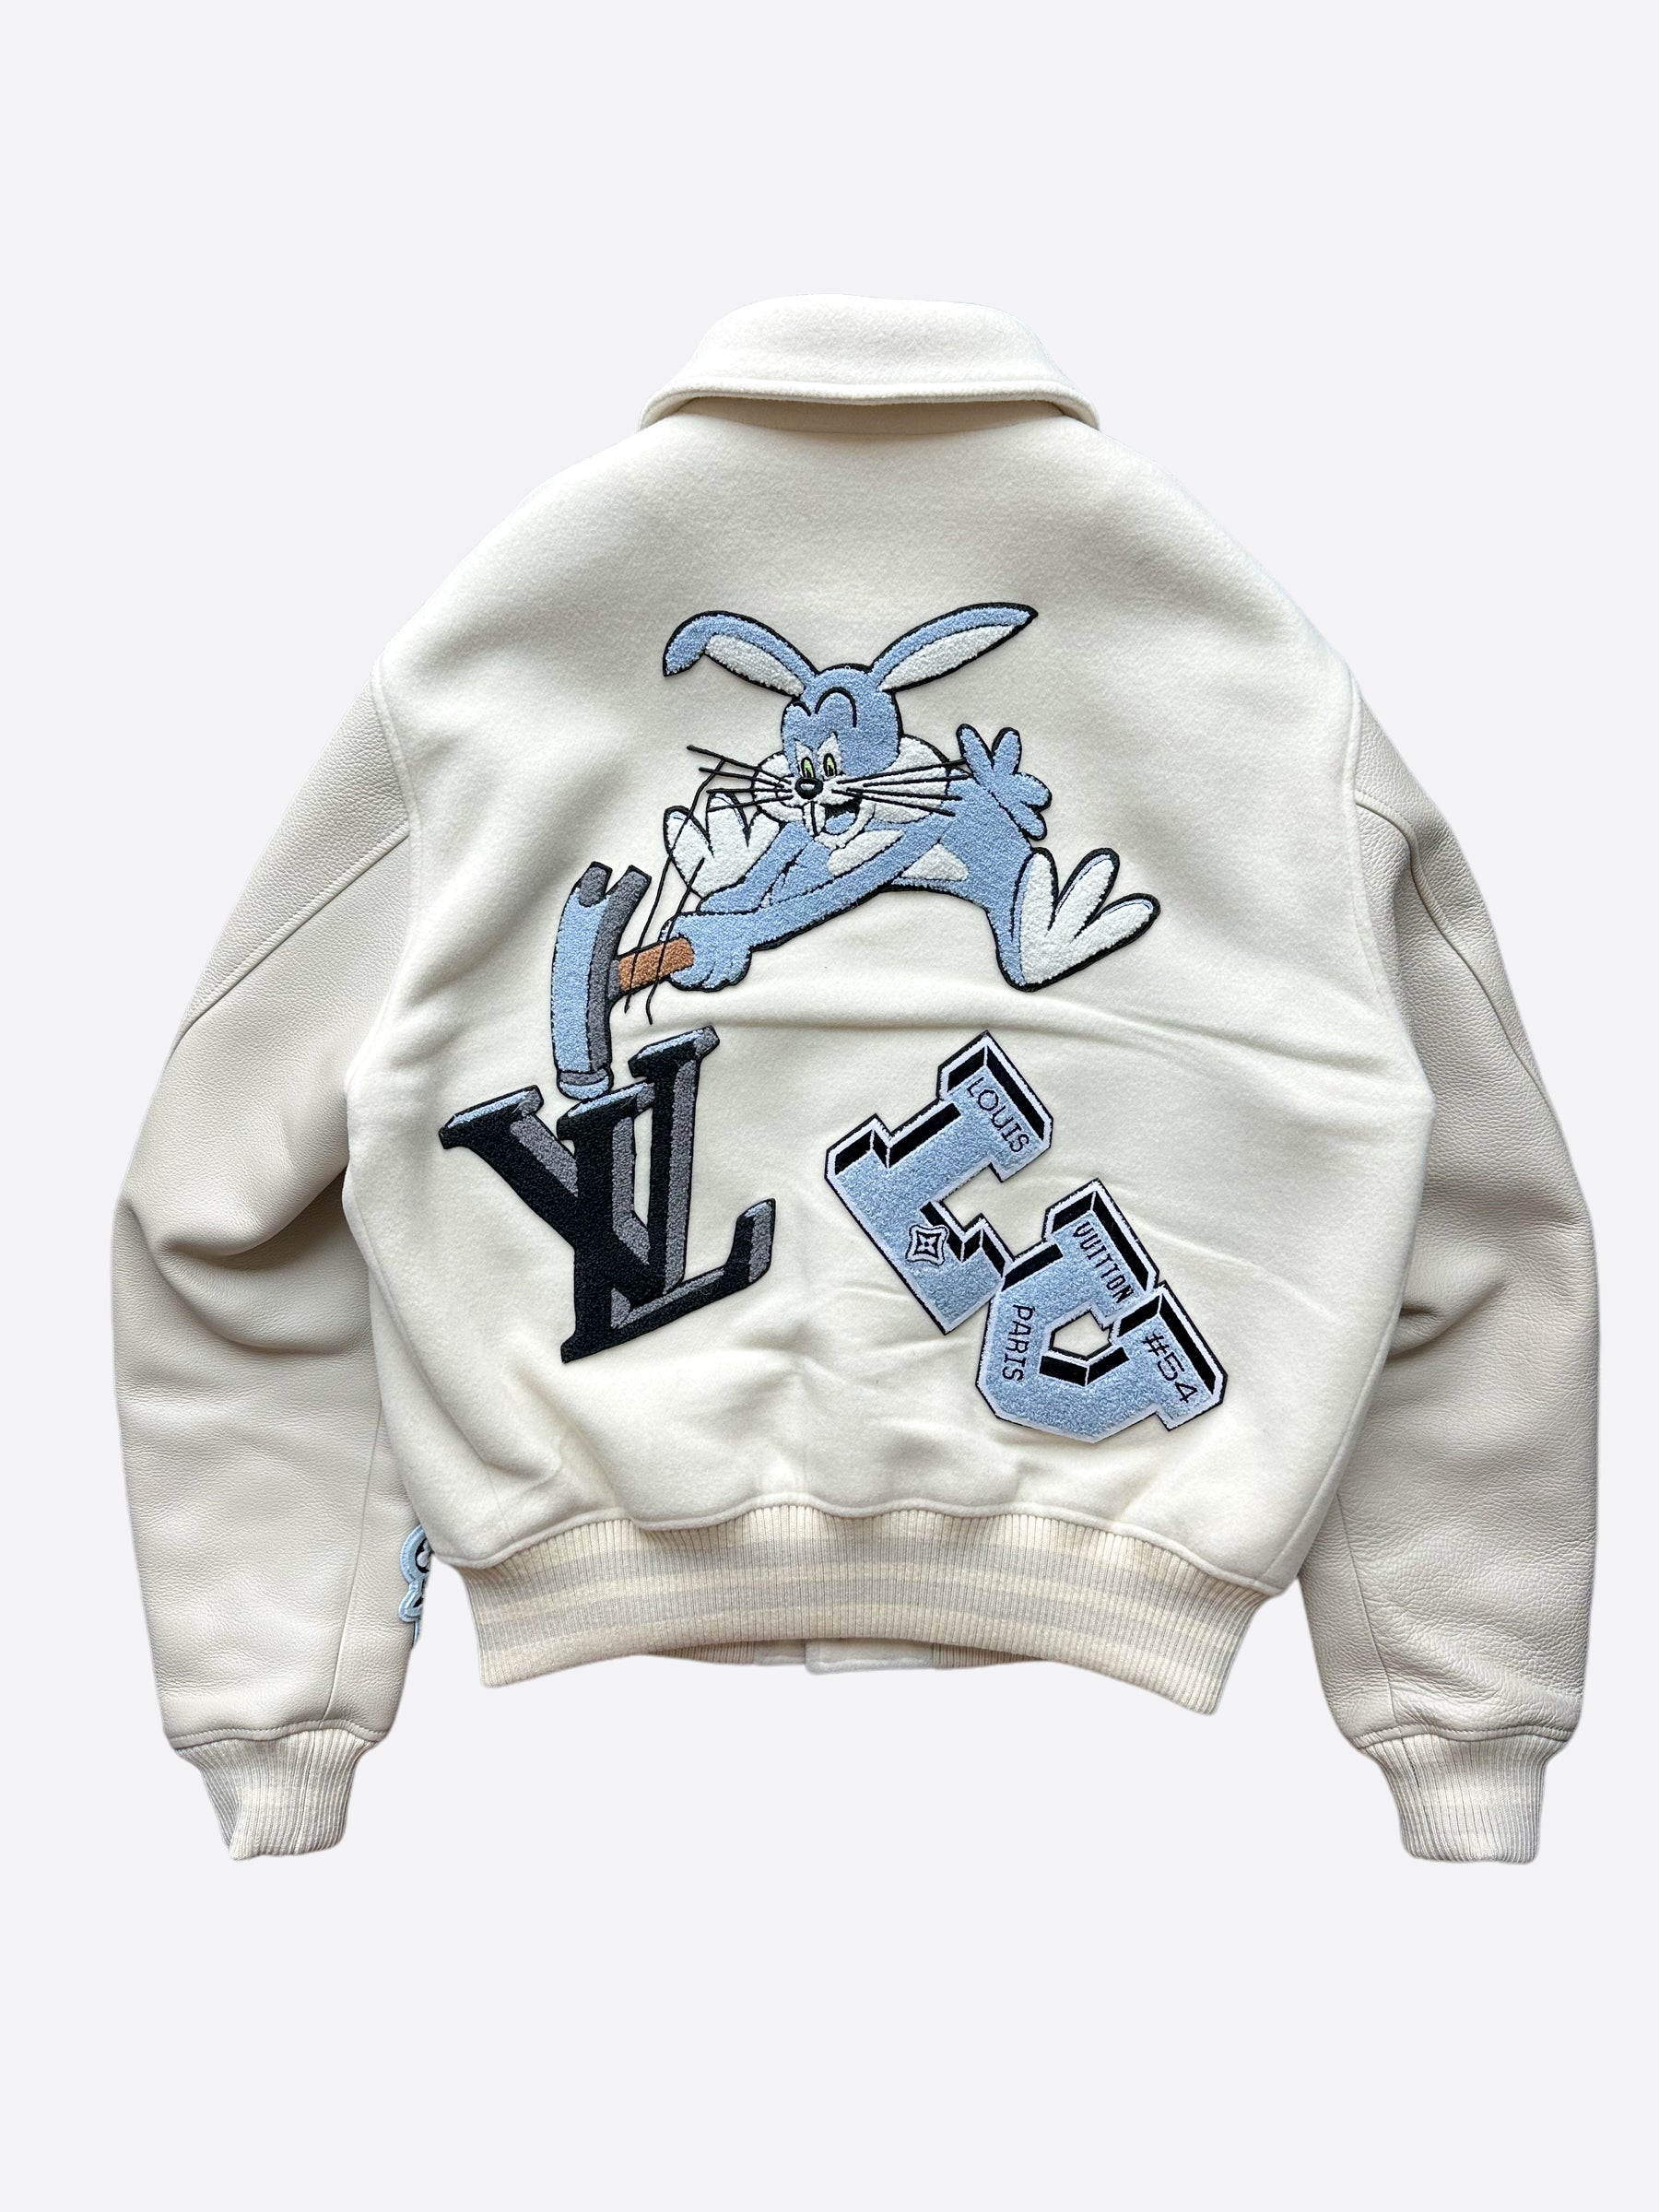 Jacket Makers Louis Vuitton Bunny Cream Varsity Jacket